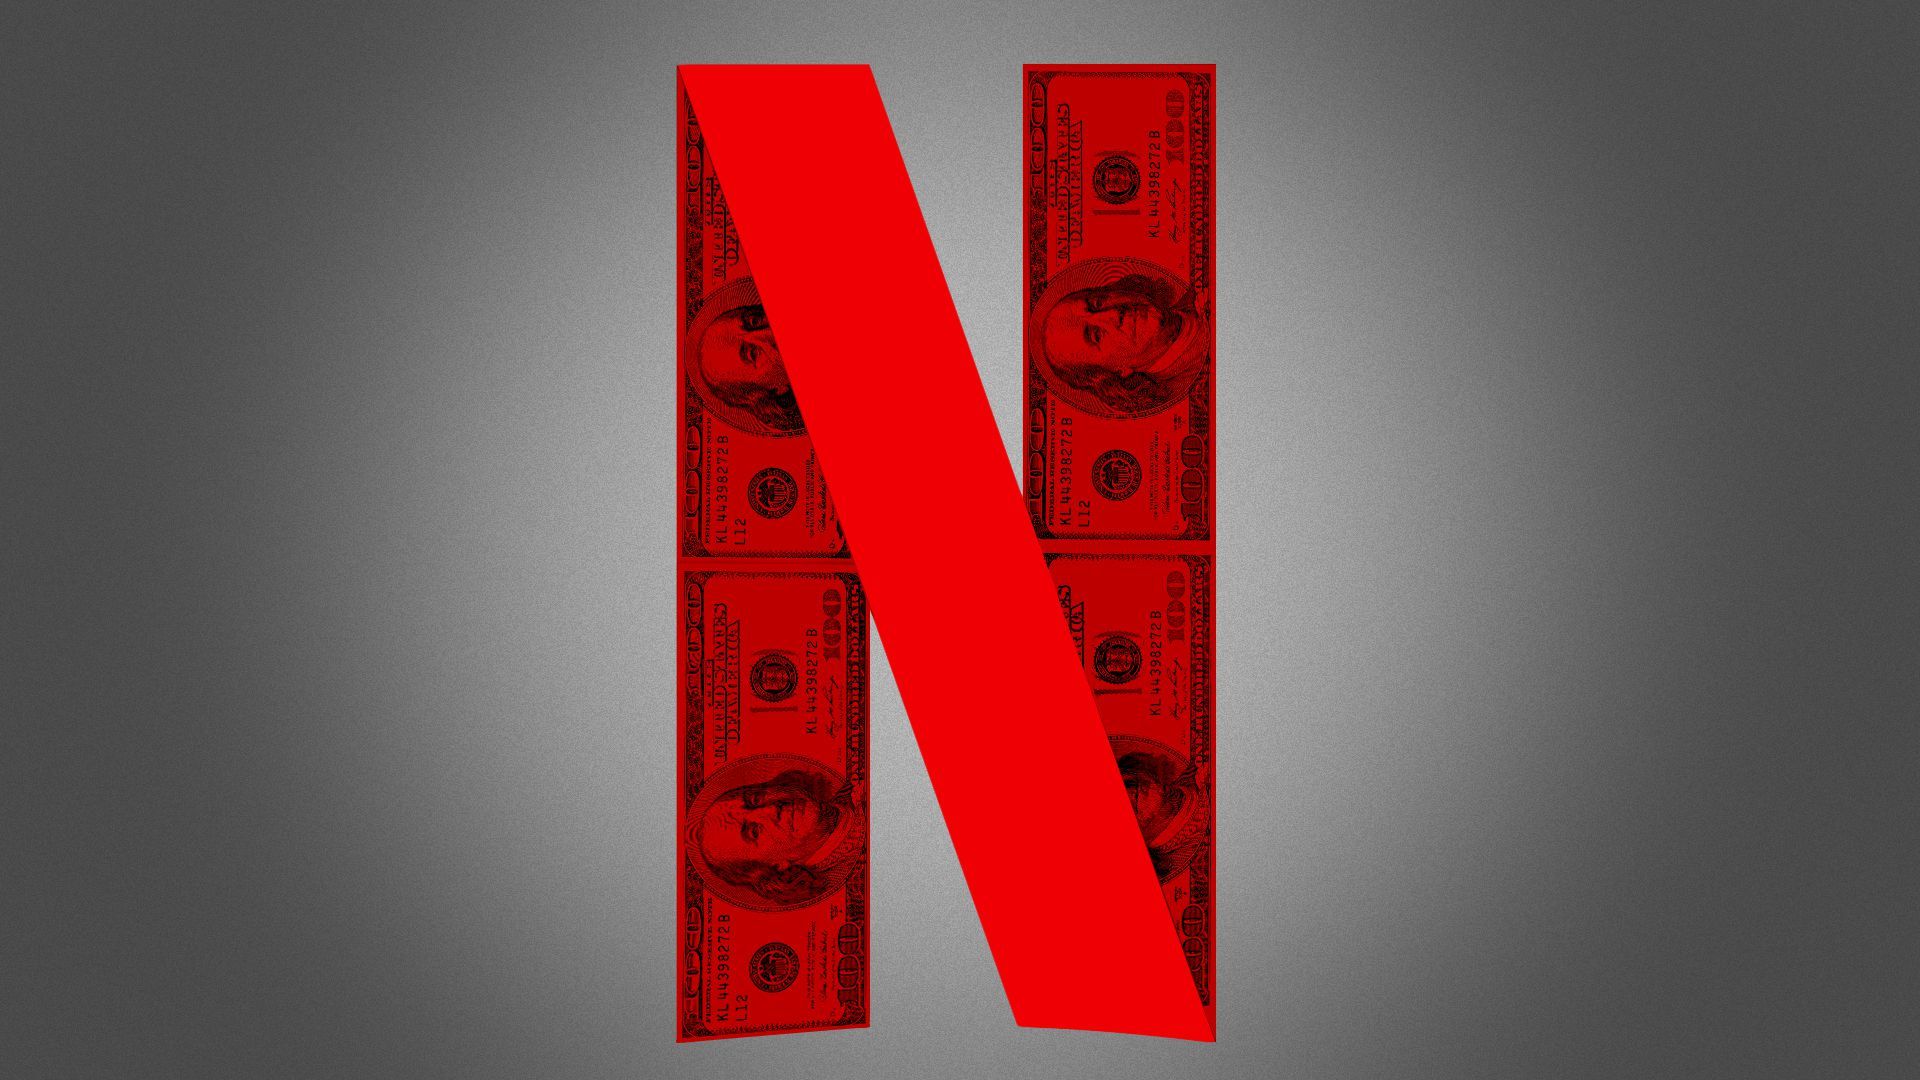 Illustration of the Netflix logo made of dollar bills.